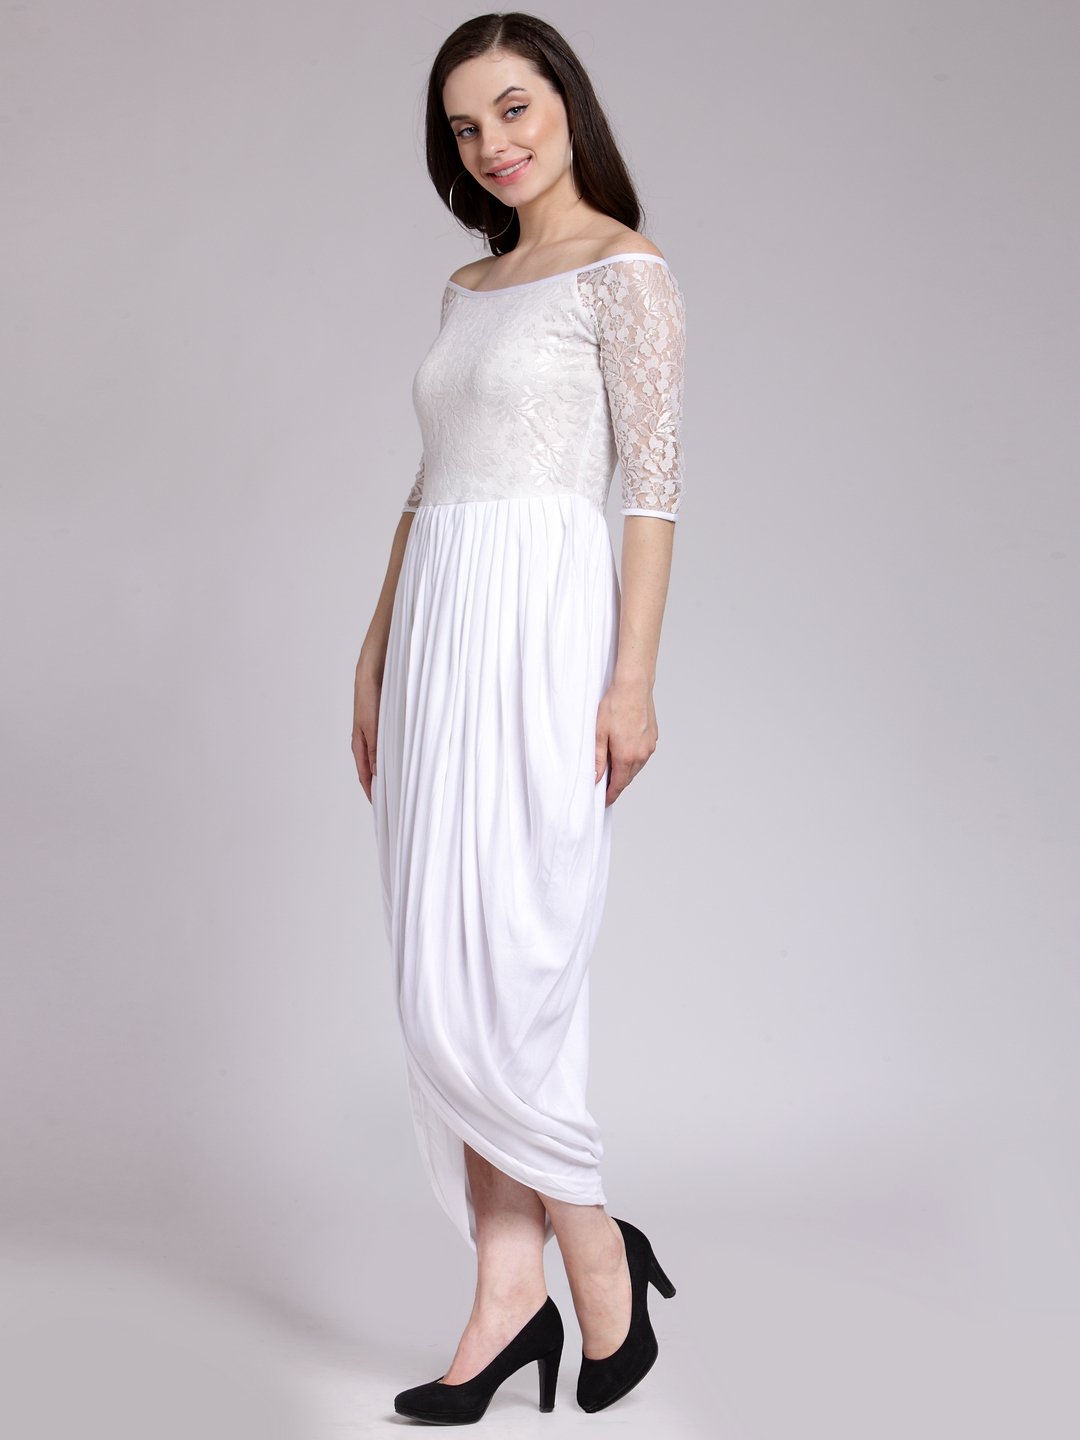 White Lace  Dress